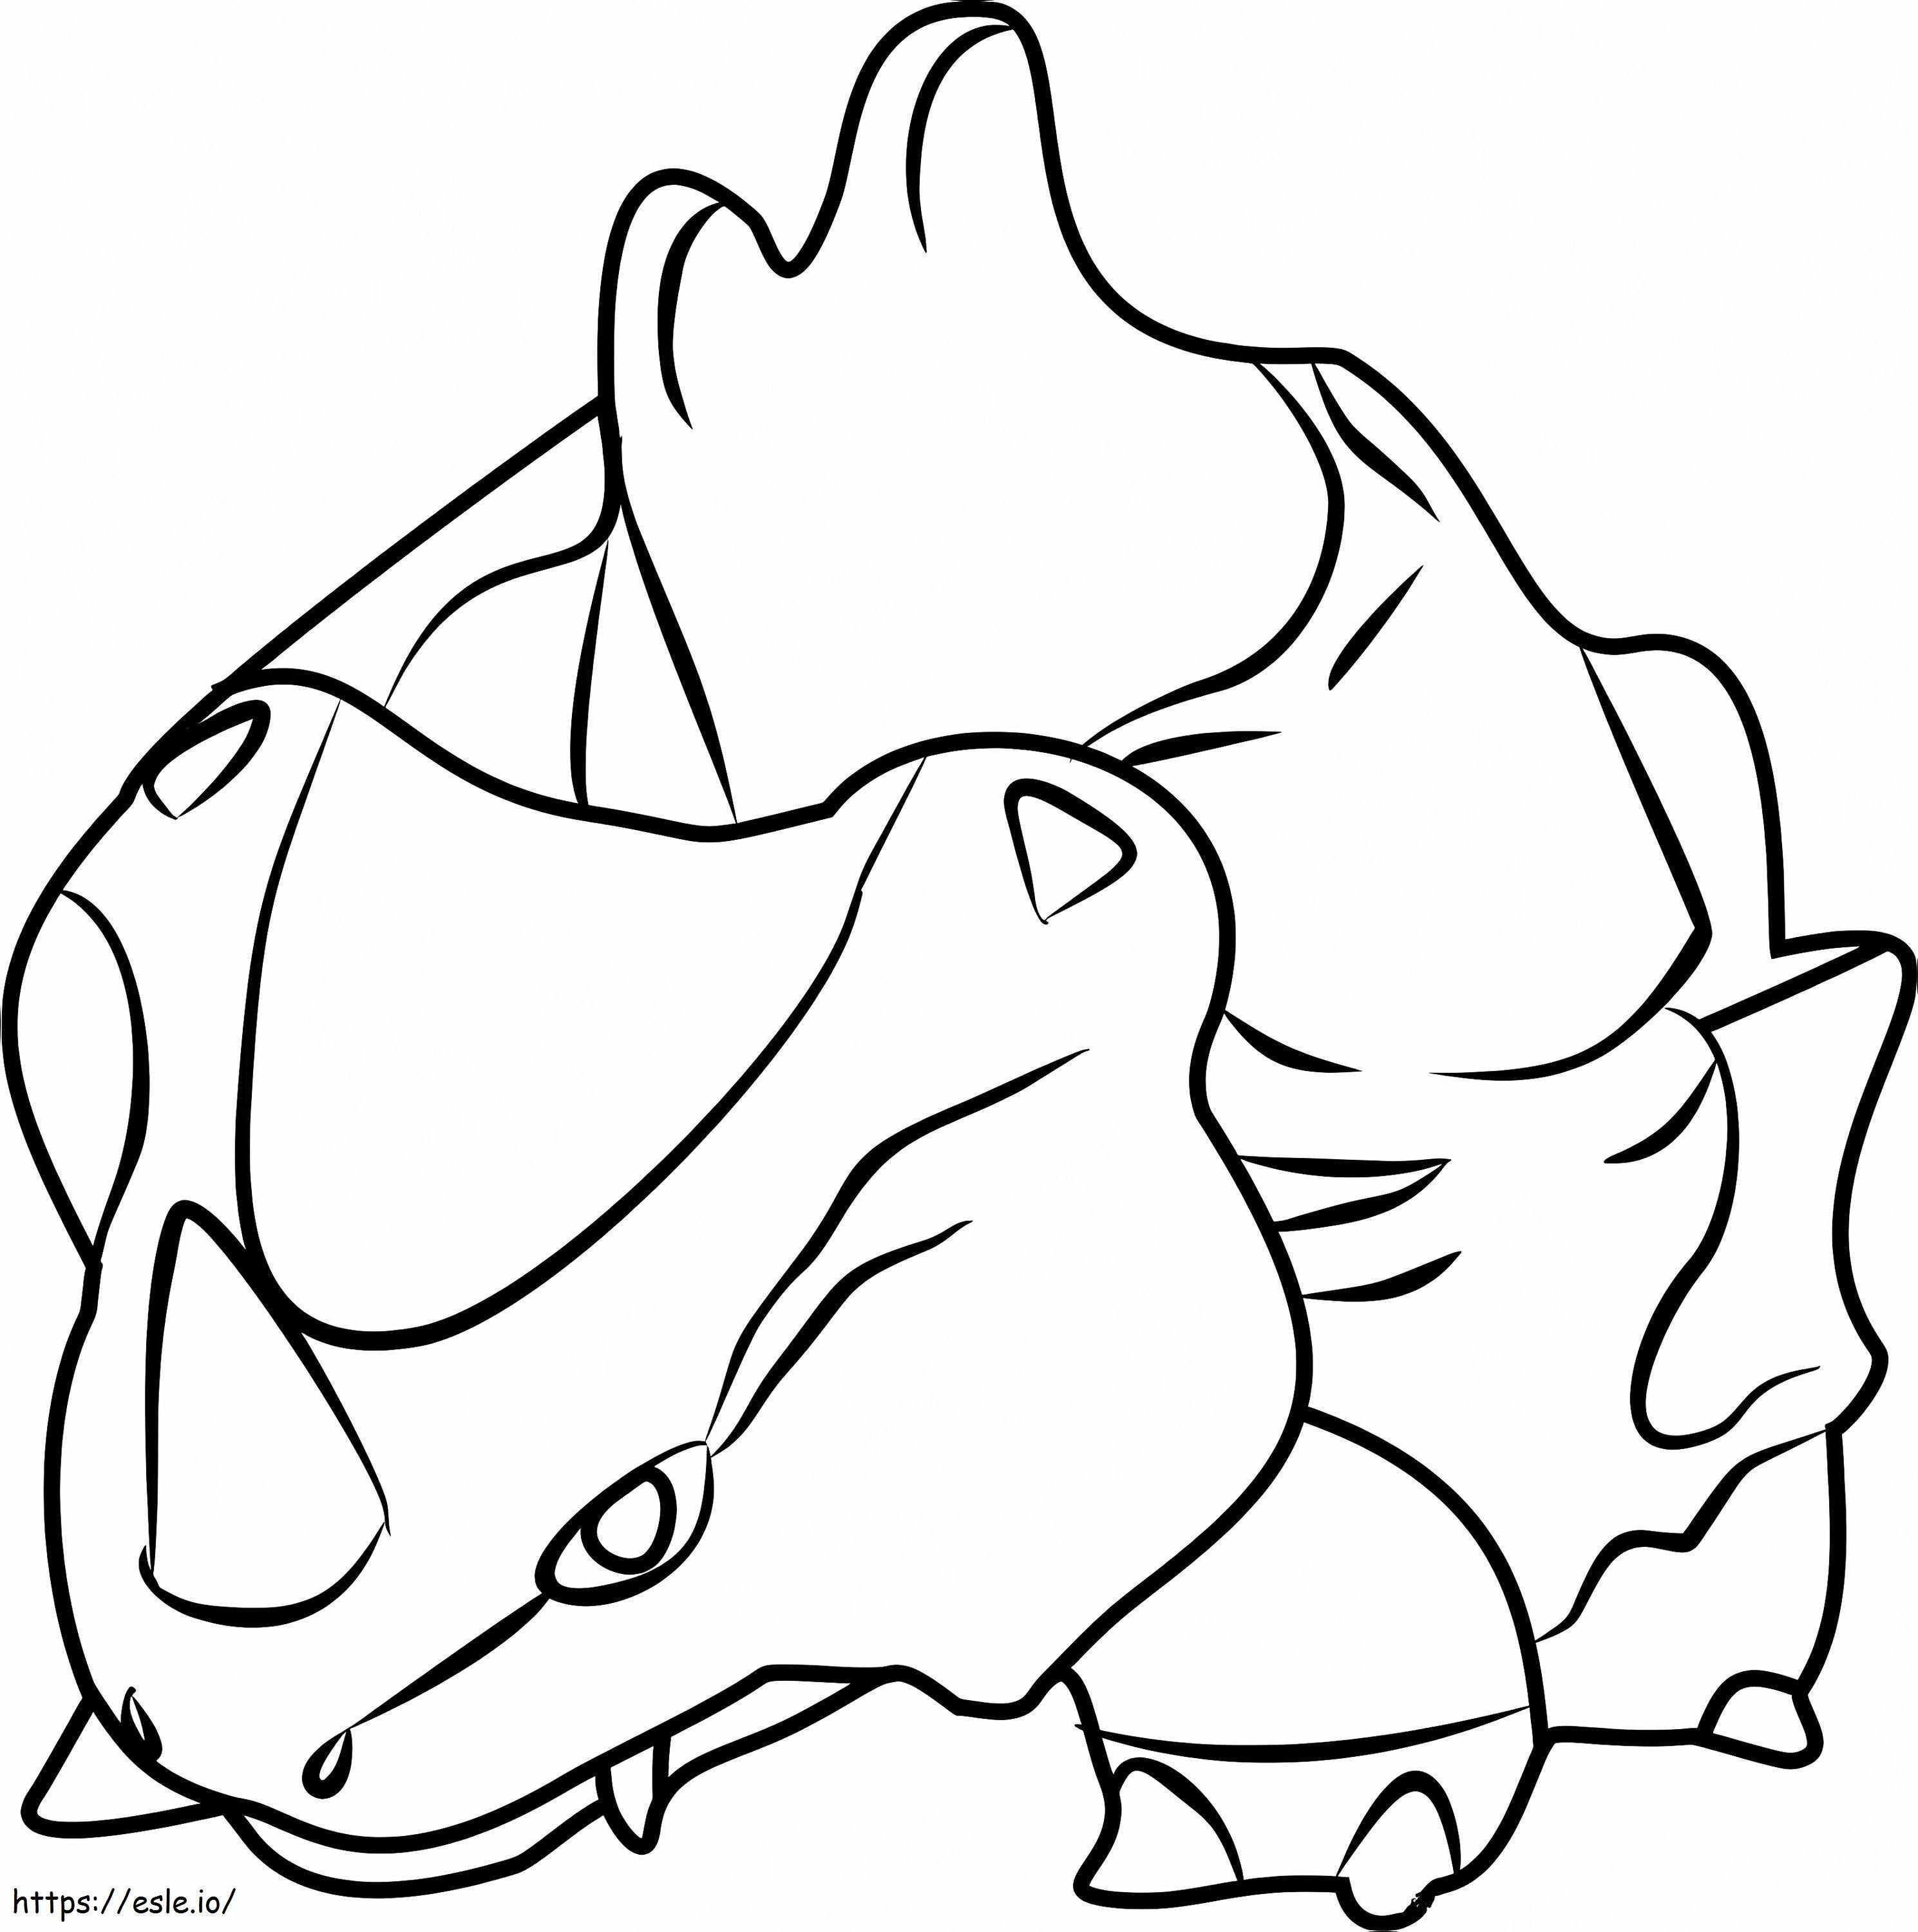 Rhyhorn Pokemon Go1 coloring page